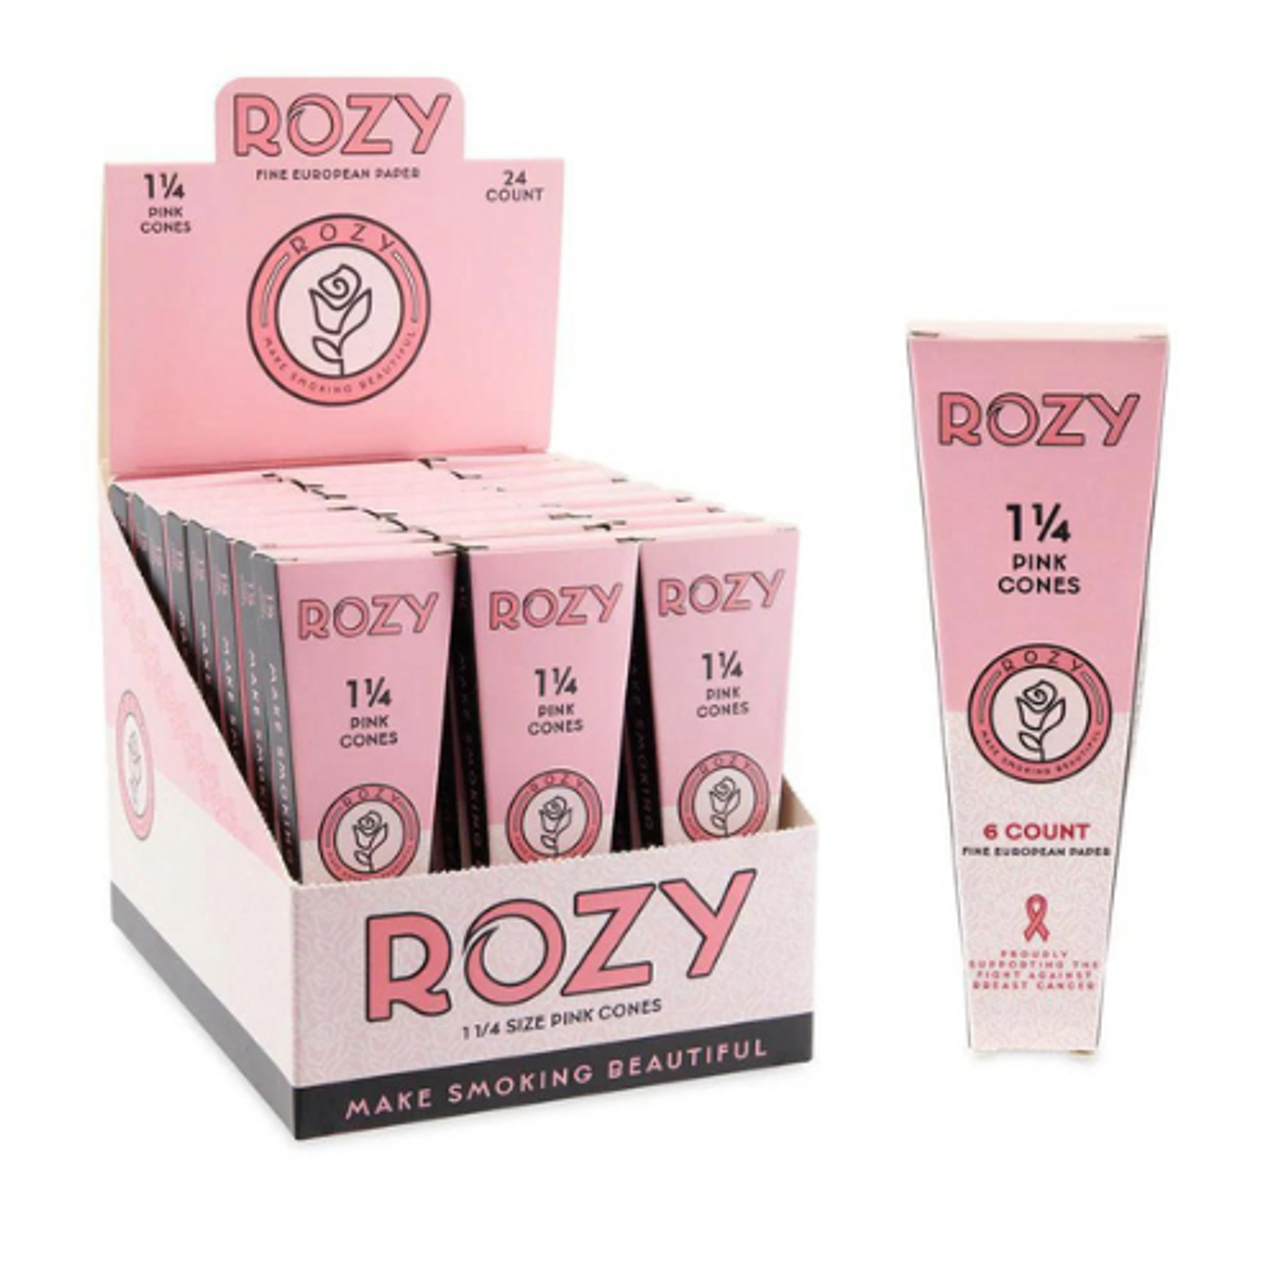 Rozy Pink Cones - 1.25 - 6 pk. - 24 ct. Display